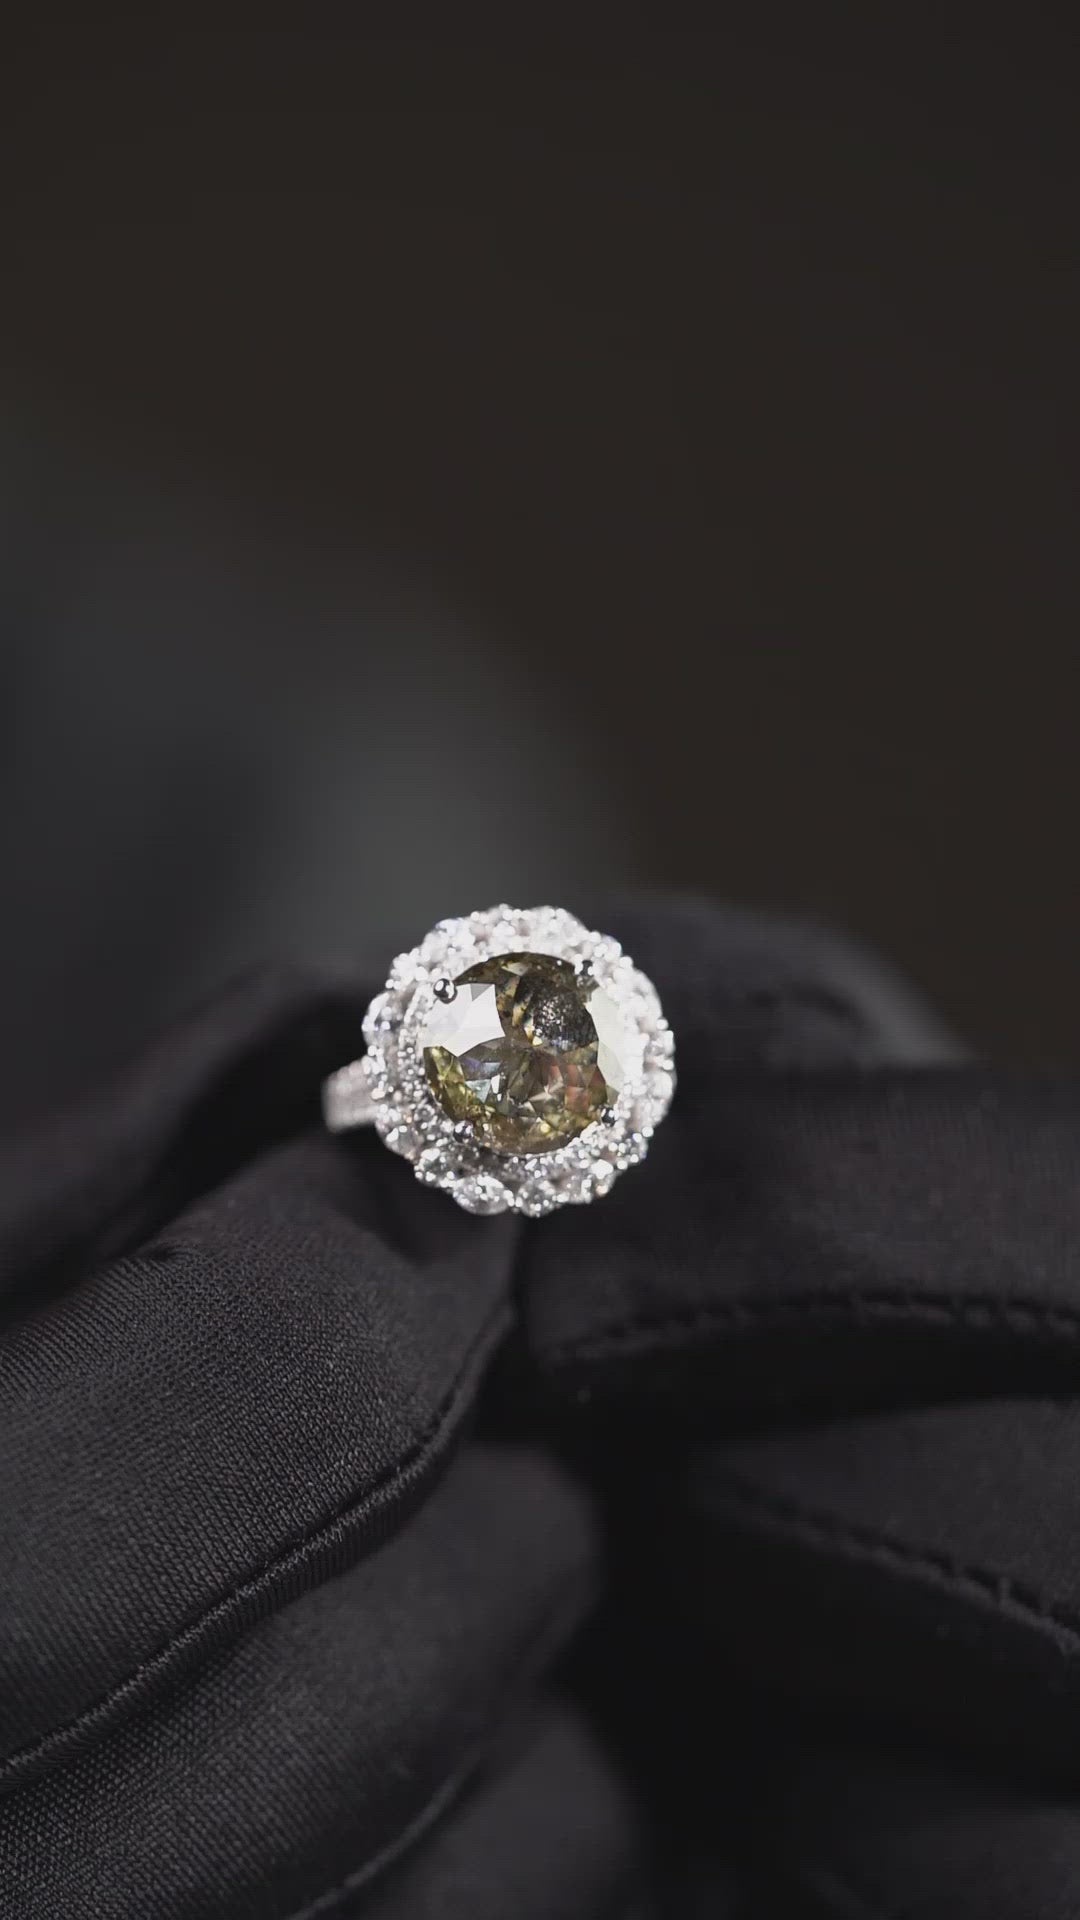 Fancy Yellowish Green Rose Cut Diamond Ring 18K White Gold